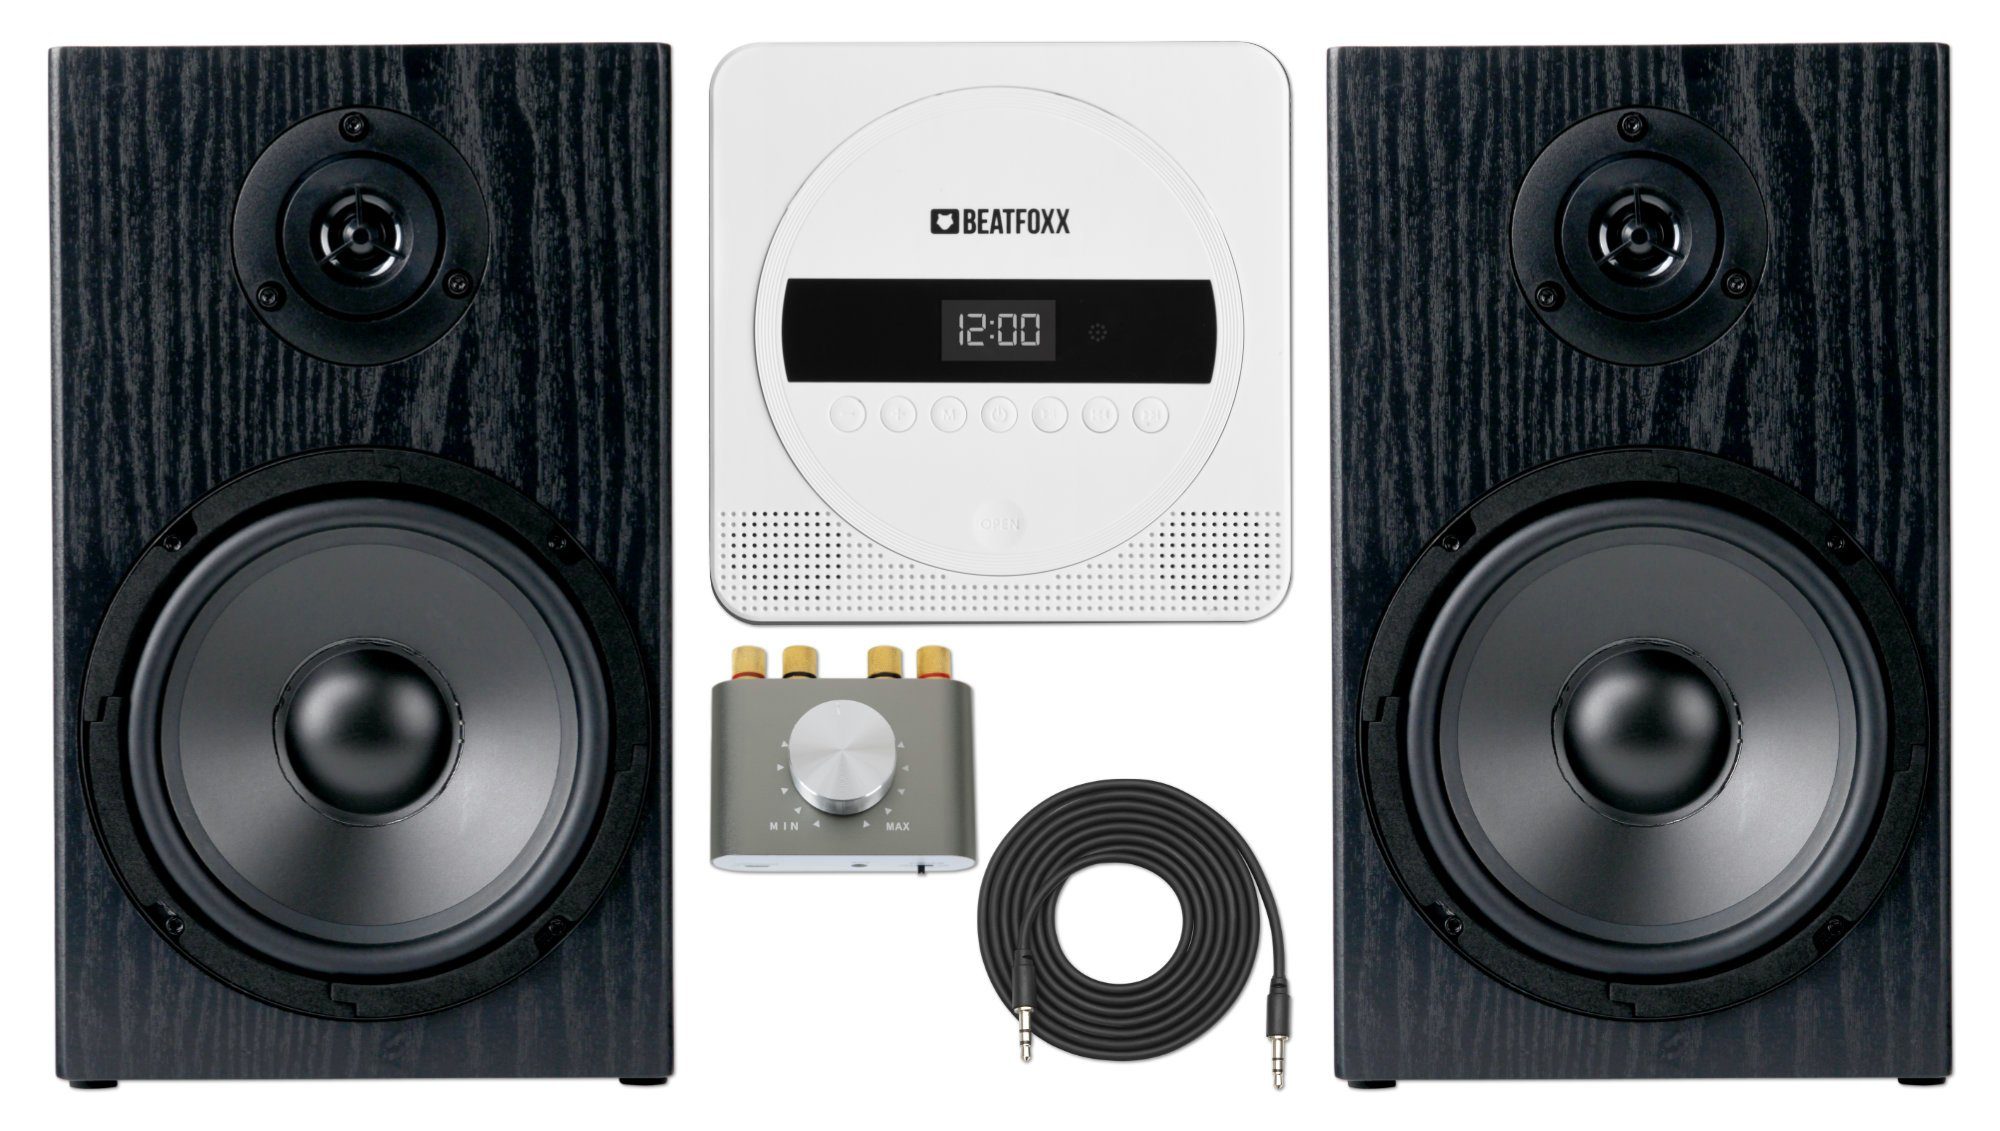 Beatfoxx MDVD-1606 Buddy Portable Multimedia- DVD-Player Set Stereoanlage  (UKW/MW Radio, 40 W, inkl. HiFi Boxen, Stereo Verstärker mit Bluetooth)